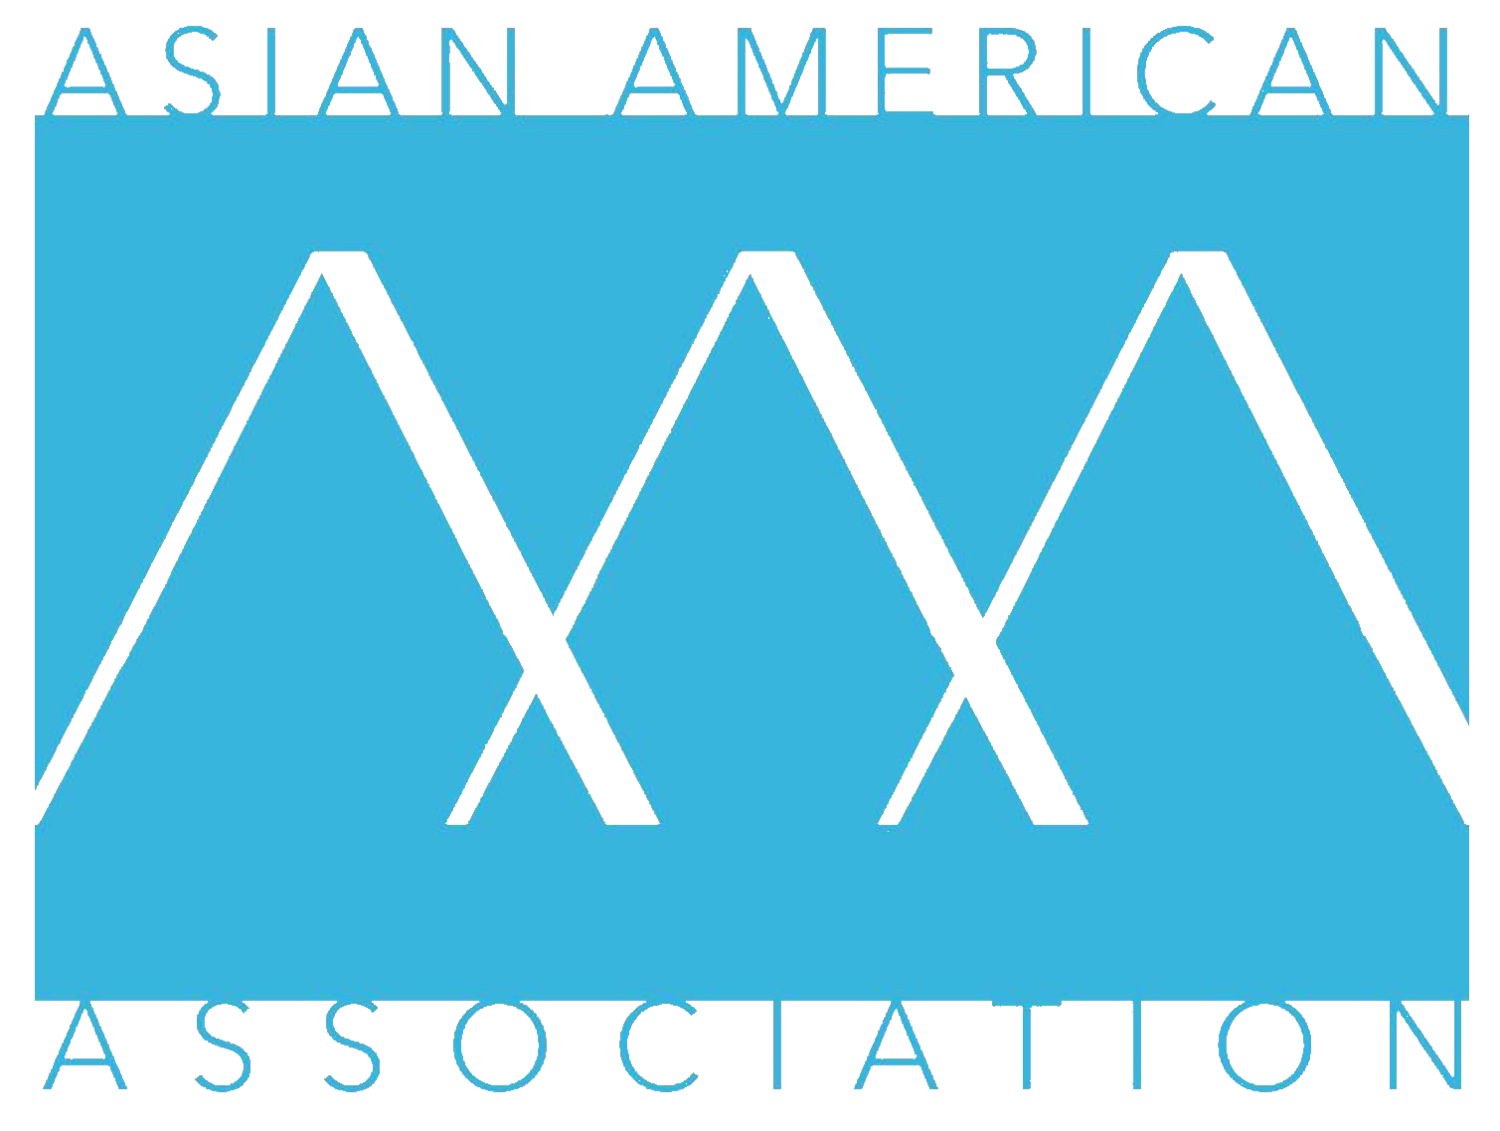 Harvard-Radcliffe Asian American Association